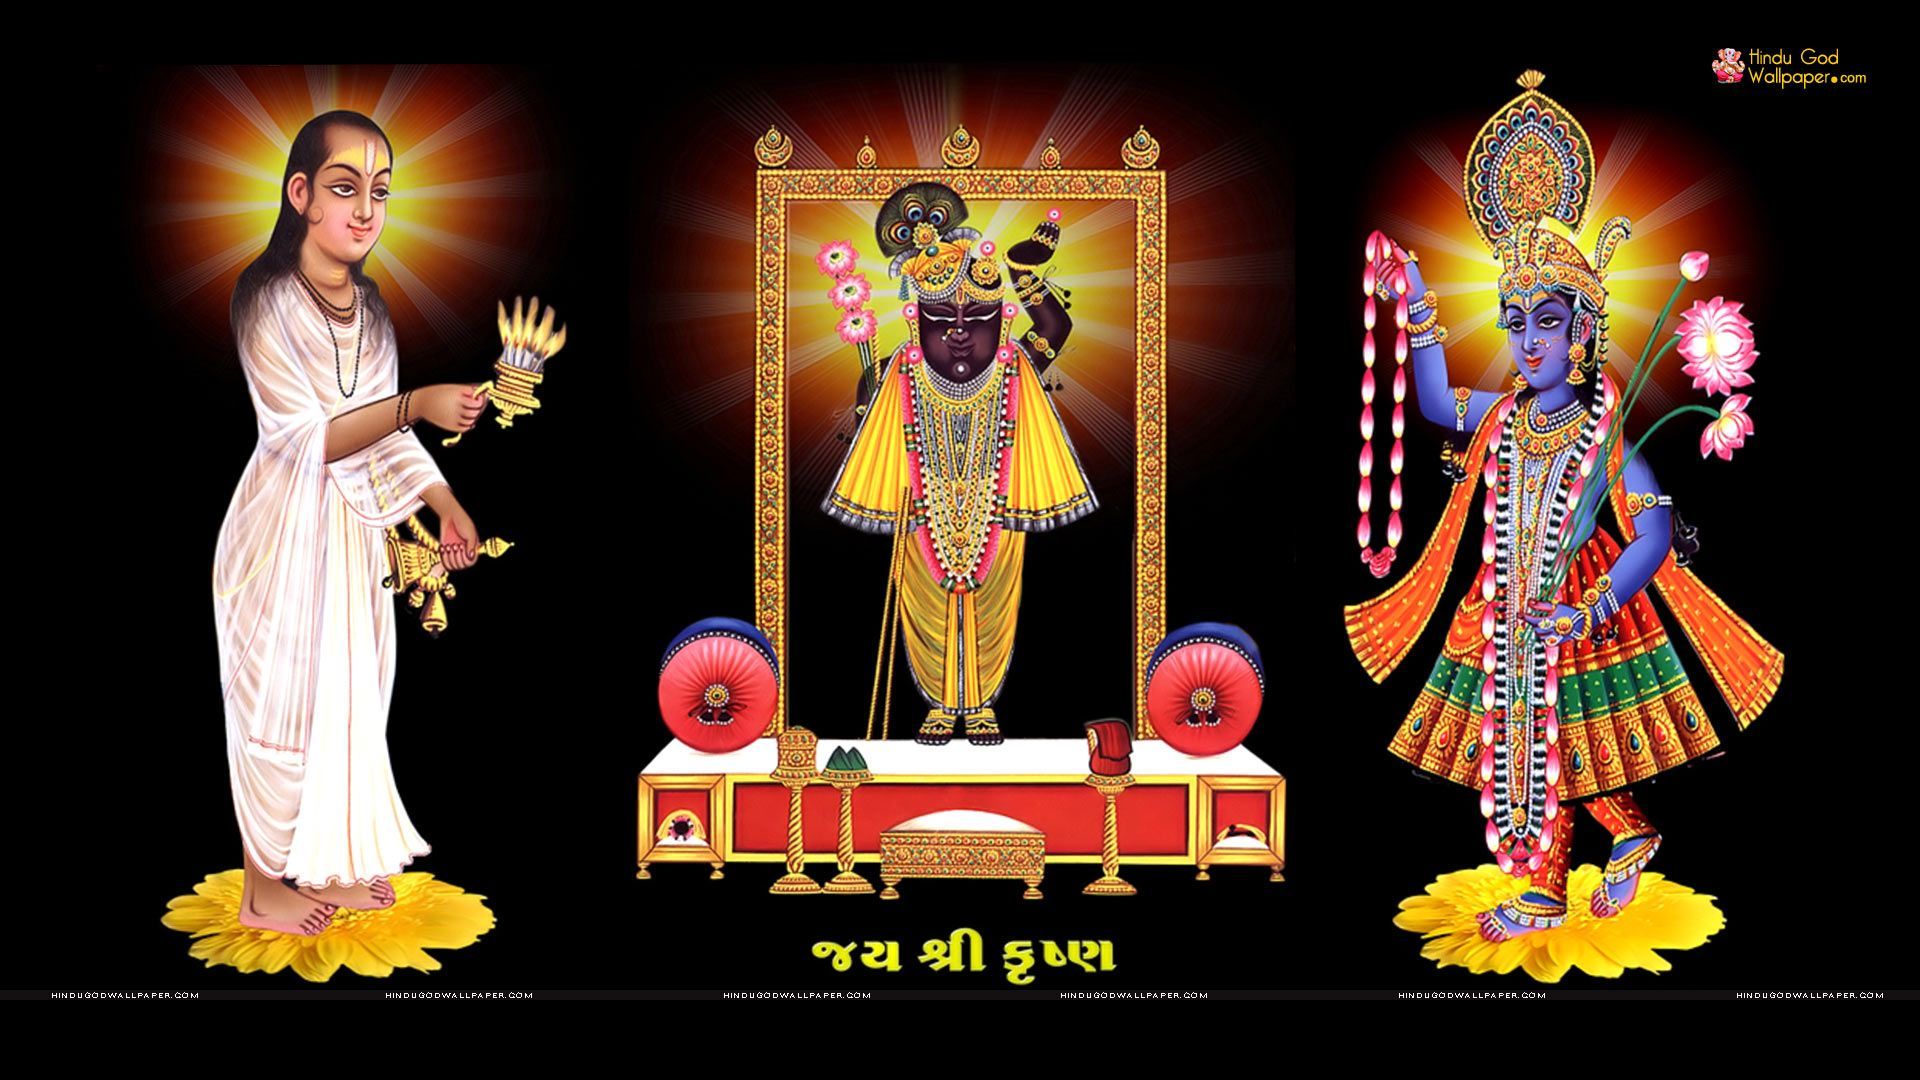 Shrinathji hi-res stock photography and images - Alamy